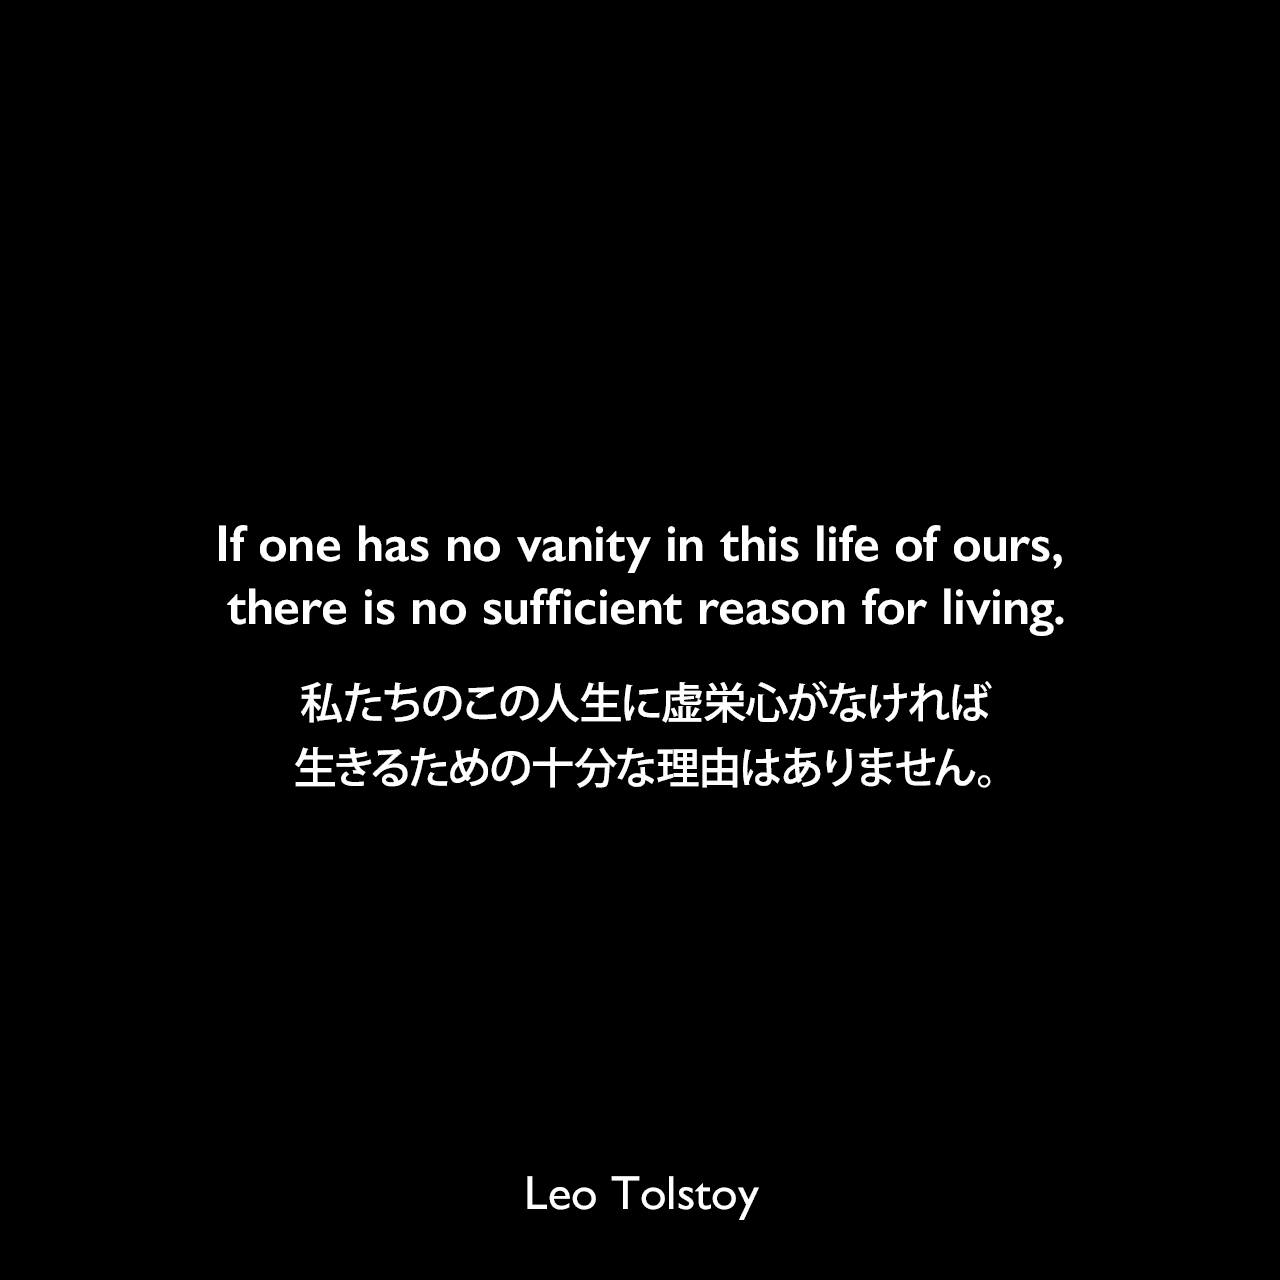 If one has no vanity in this life of ours, there is no sufficient reason for living.私たちのこの人生に虚栄心がなければ、生きるための十分な理由はありません。- トルストイによる小説「クロイツェル・ソナタ」よりLeo Tolstoy